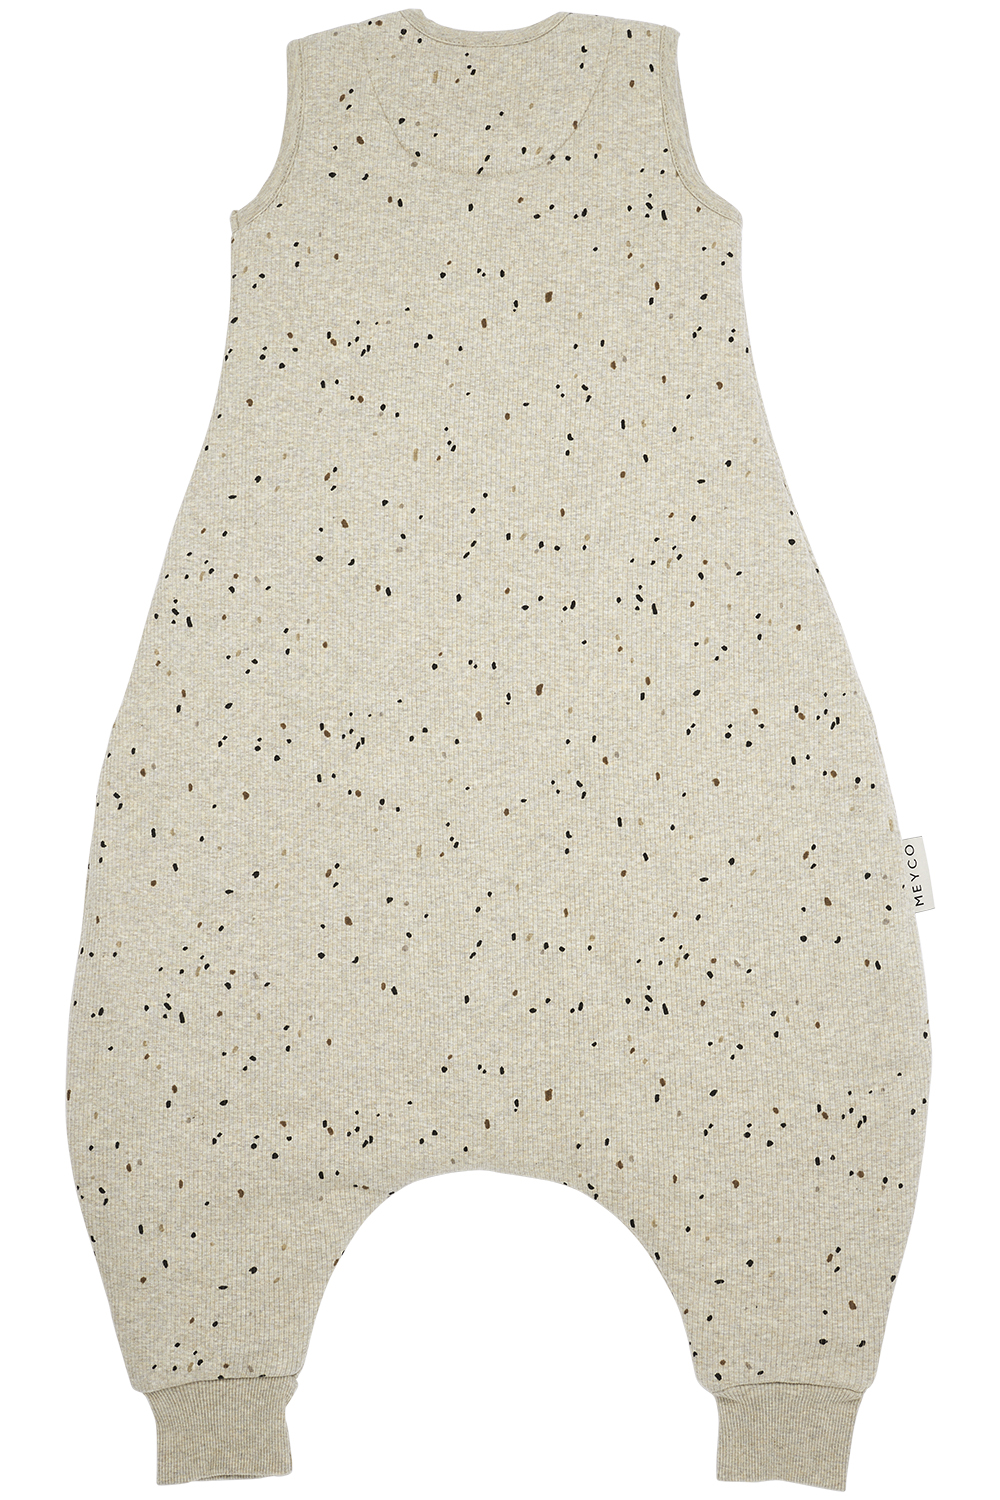 Baby winter Schlafoverall Jumper Rib Mini Spot - sand melange - 92cm